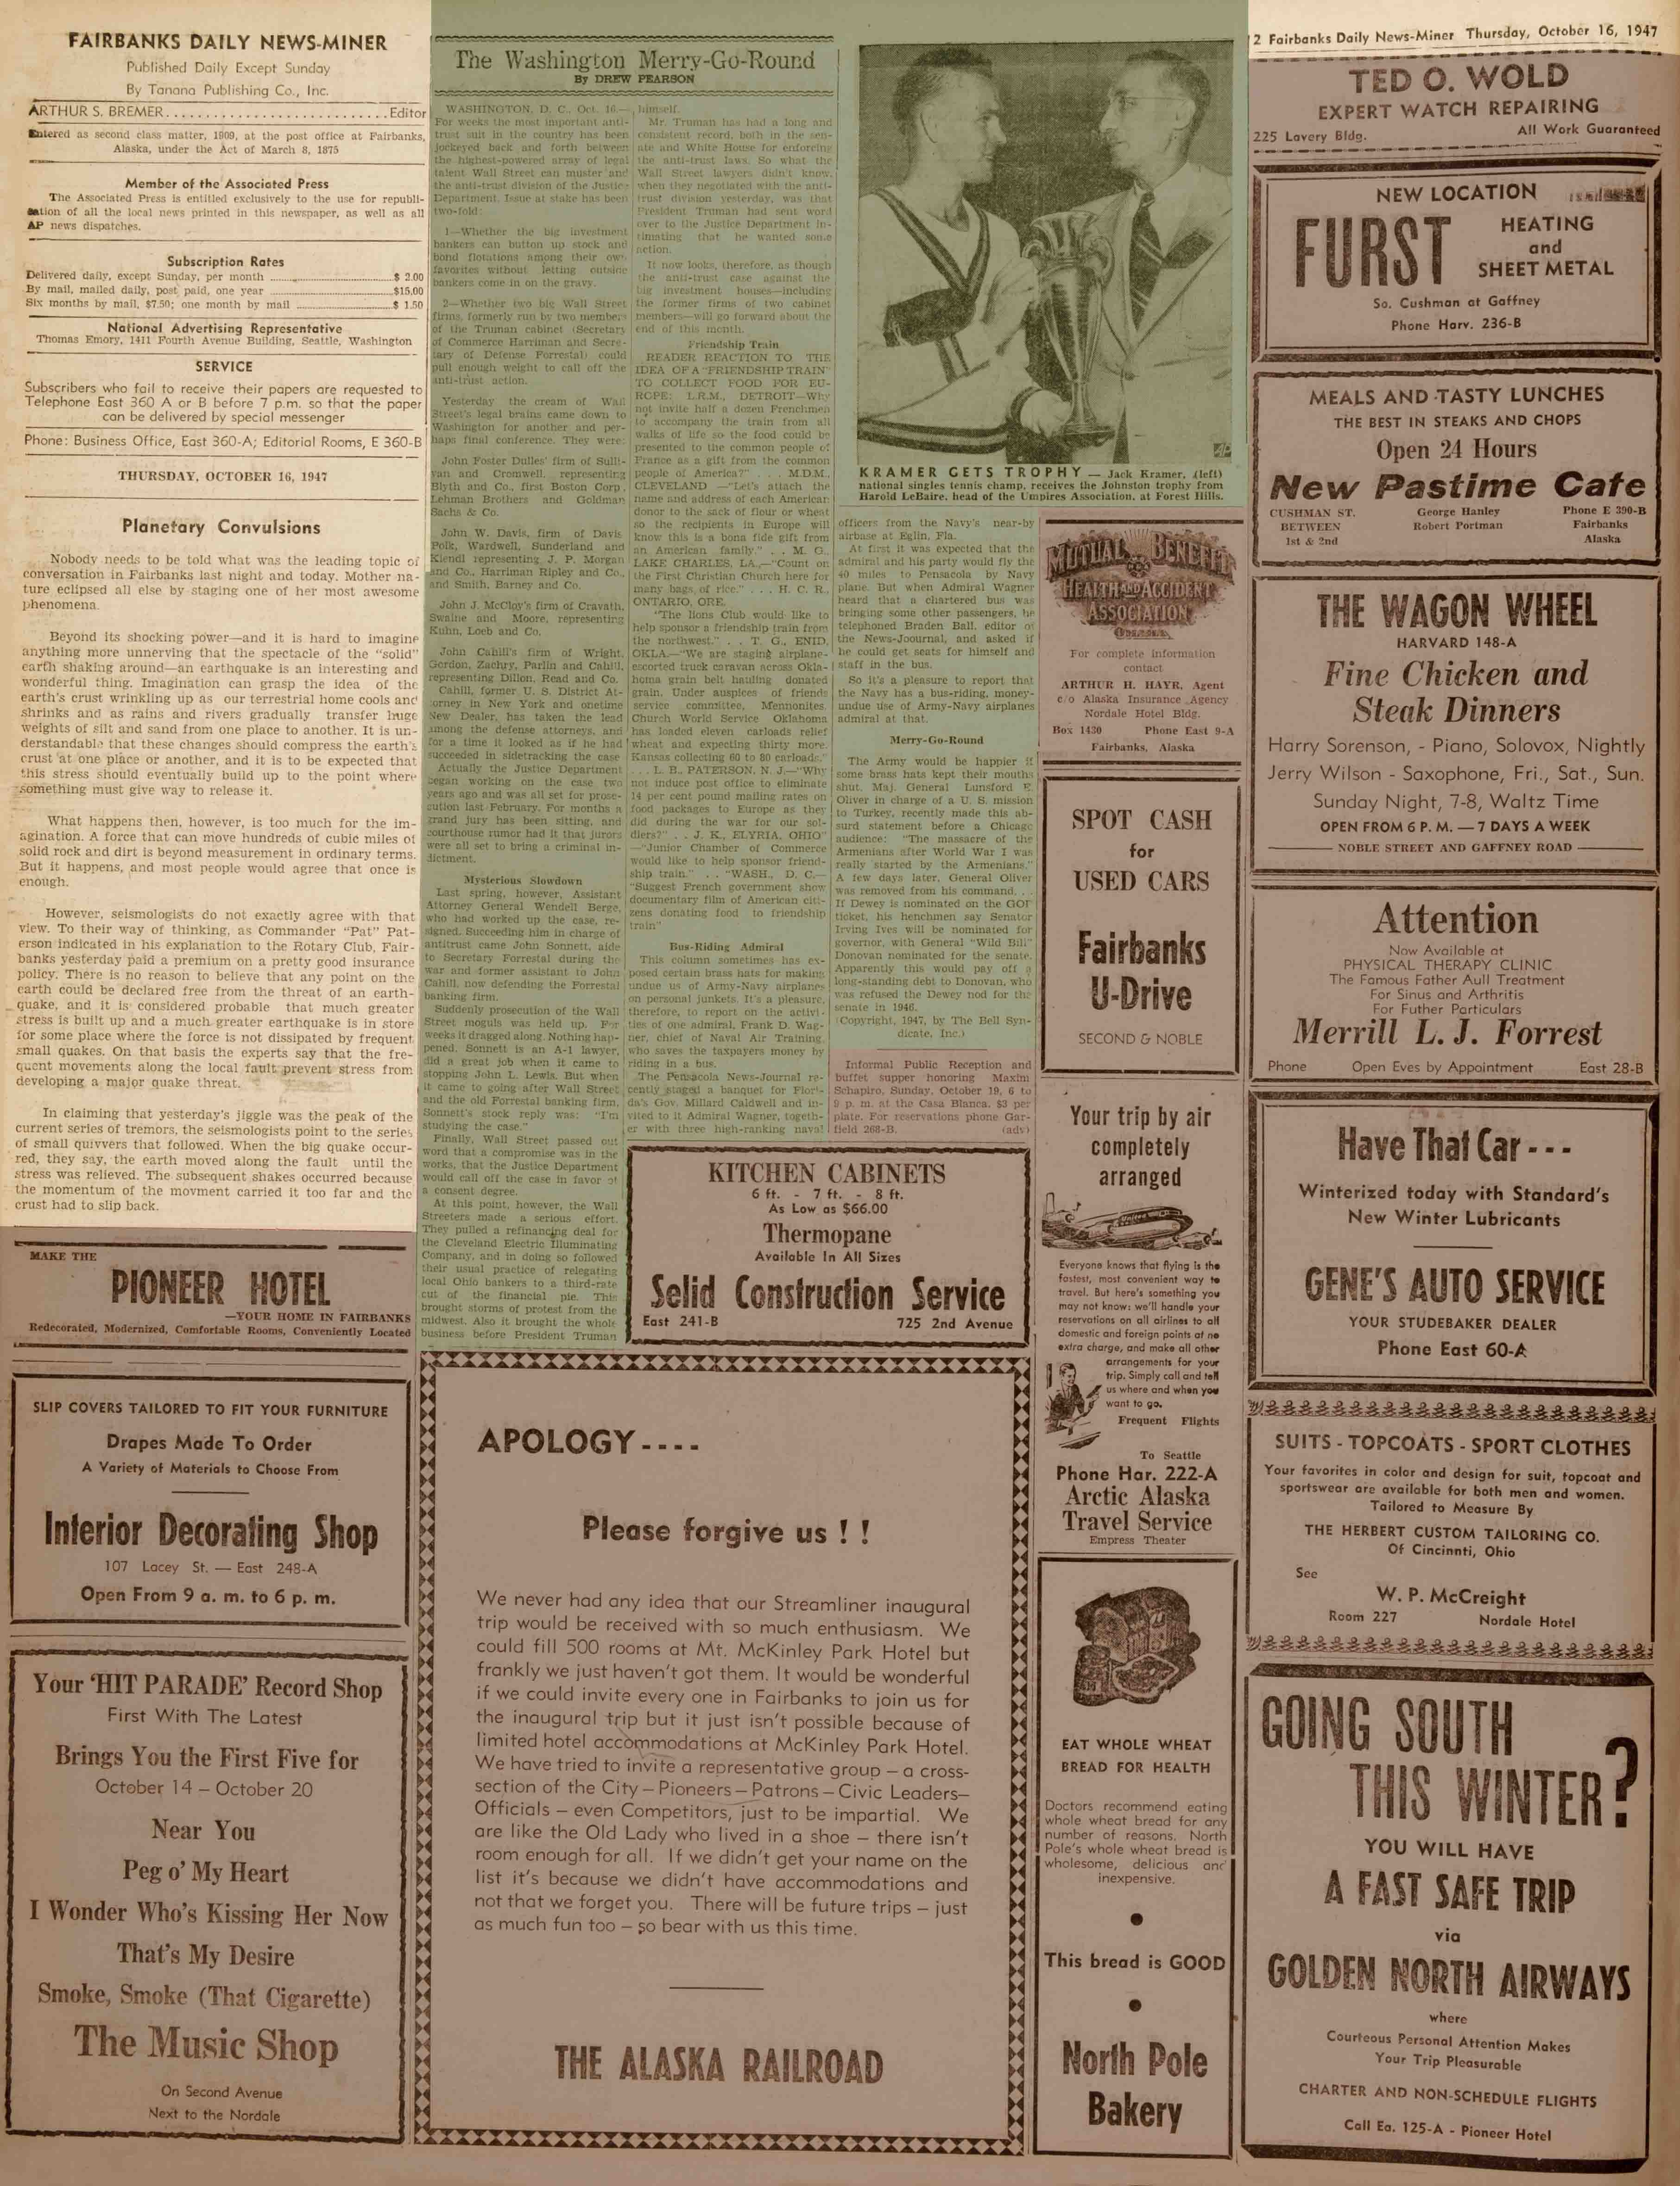 1947 October 16, Fairbanks Daily News-Miner (pg 2)